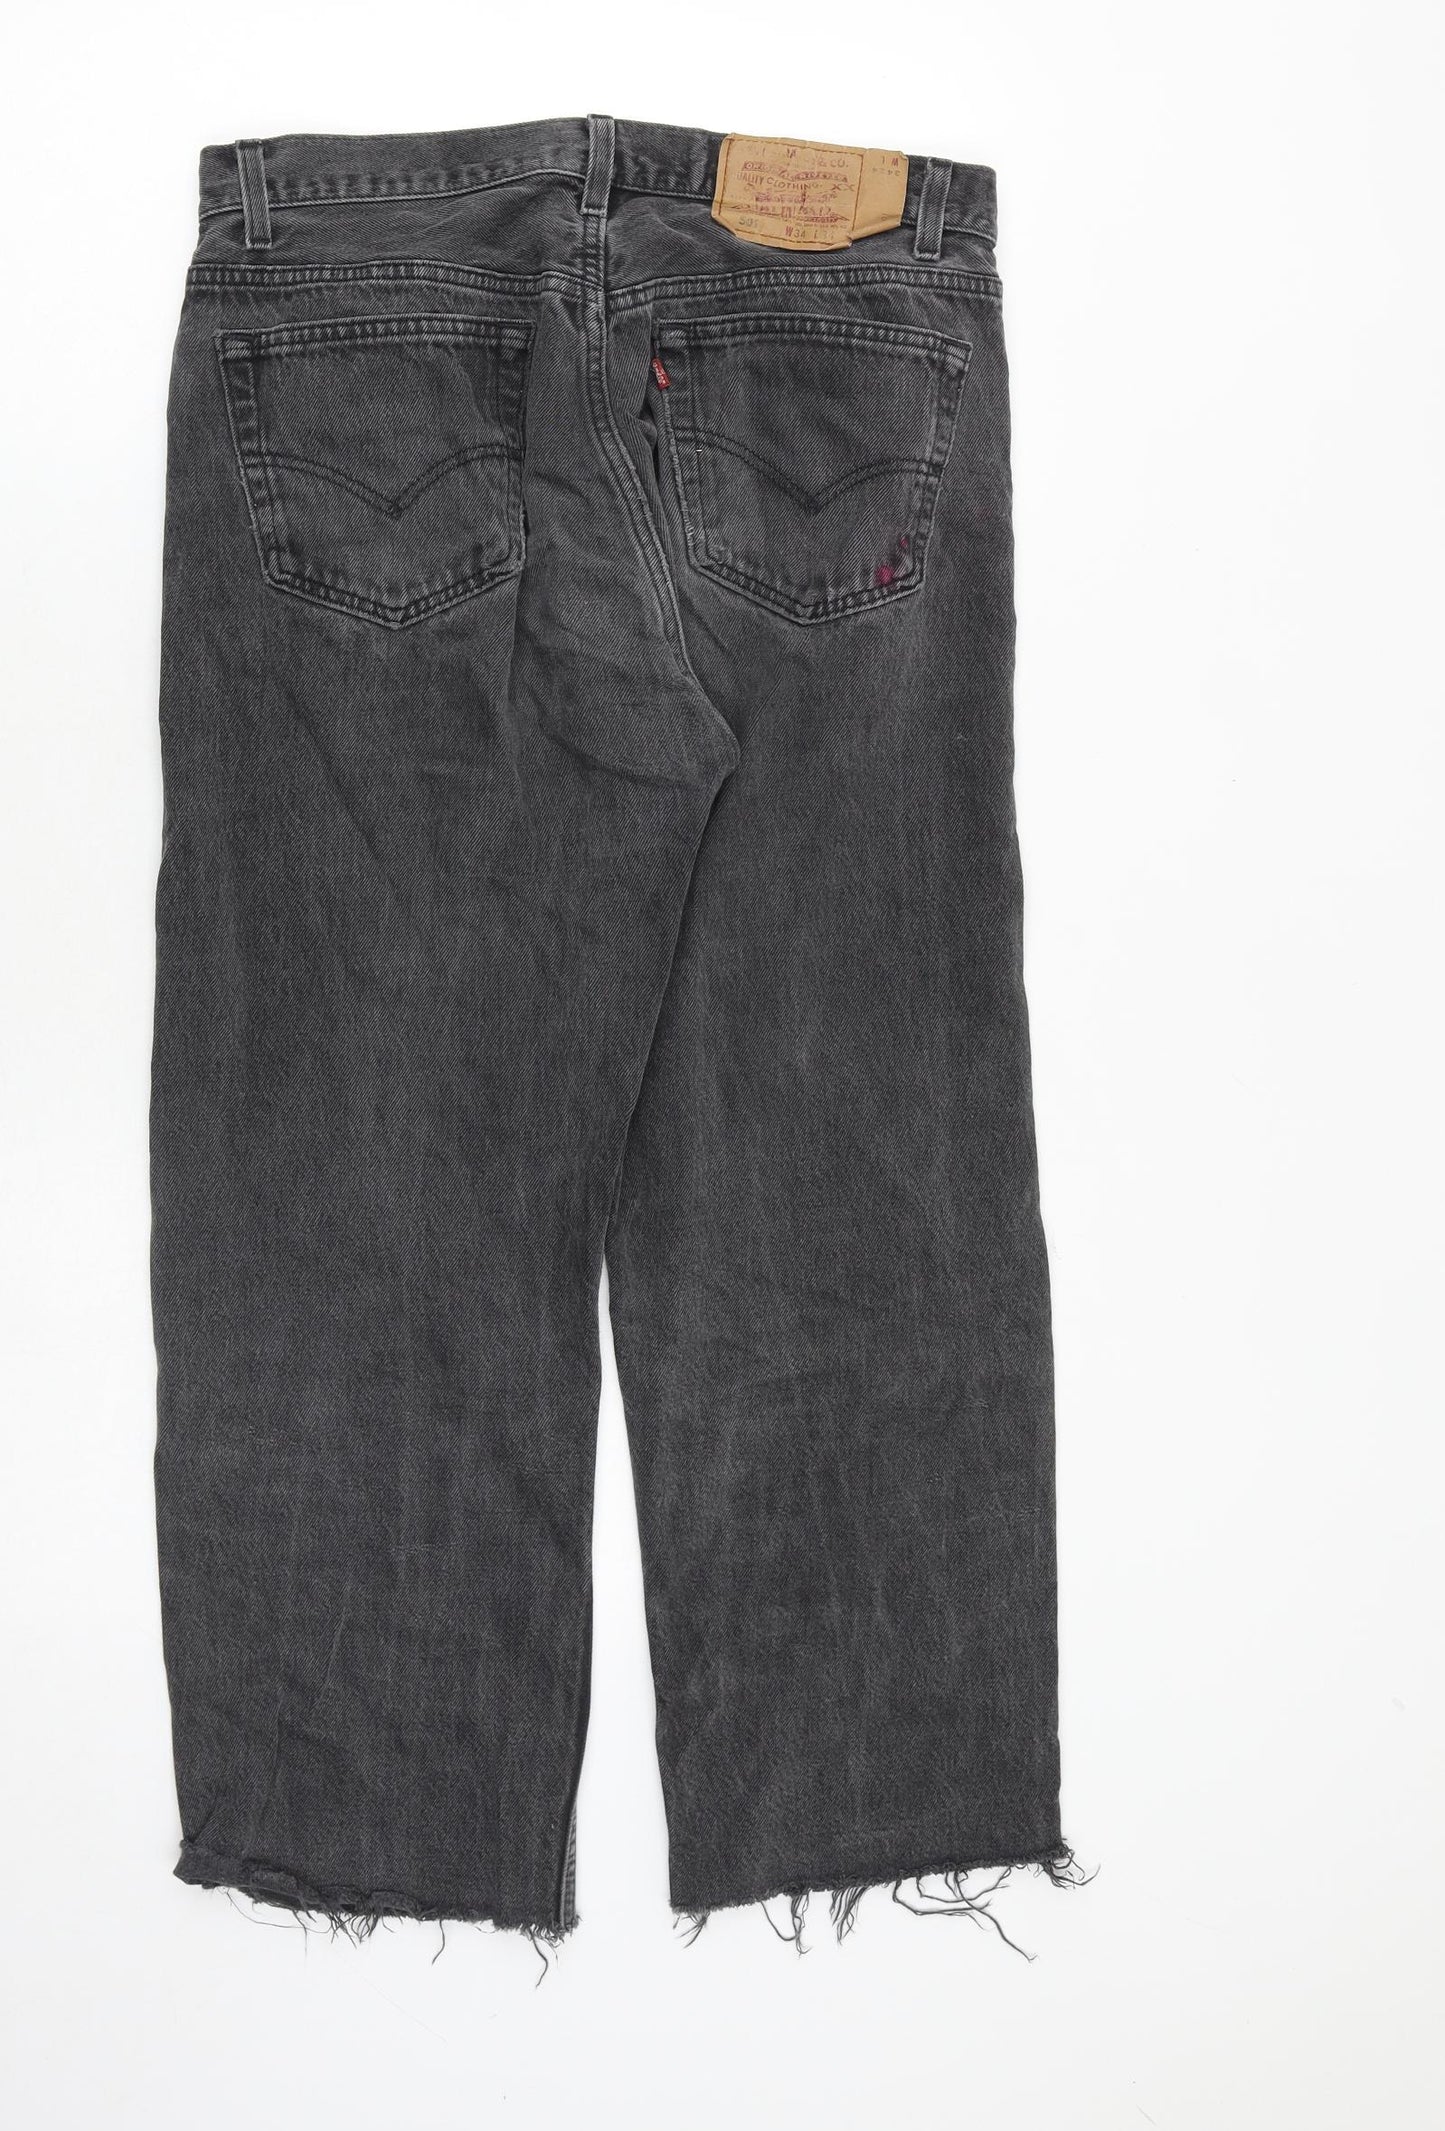 Levi's Mens Grey Herringbone Cotton Straight Jeans Size 34 in Regular Button - Distressed Hems